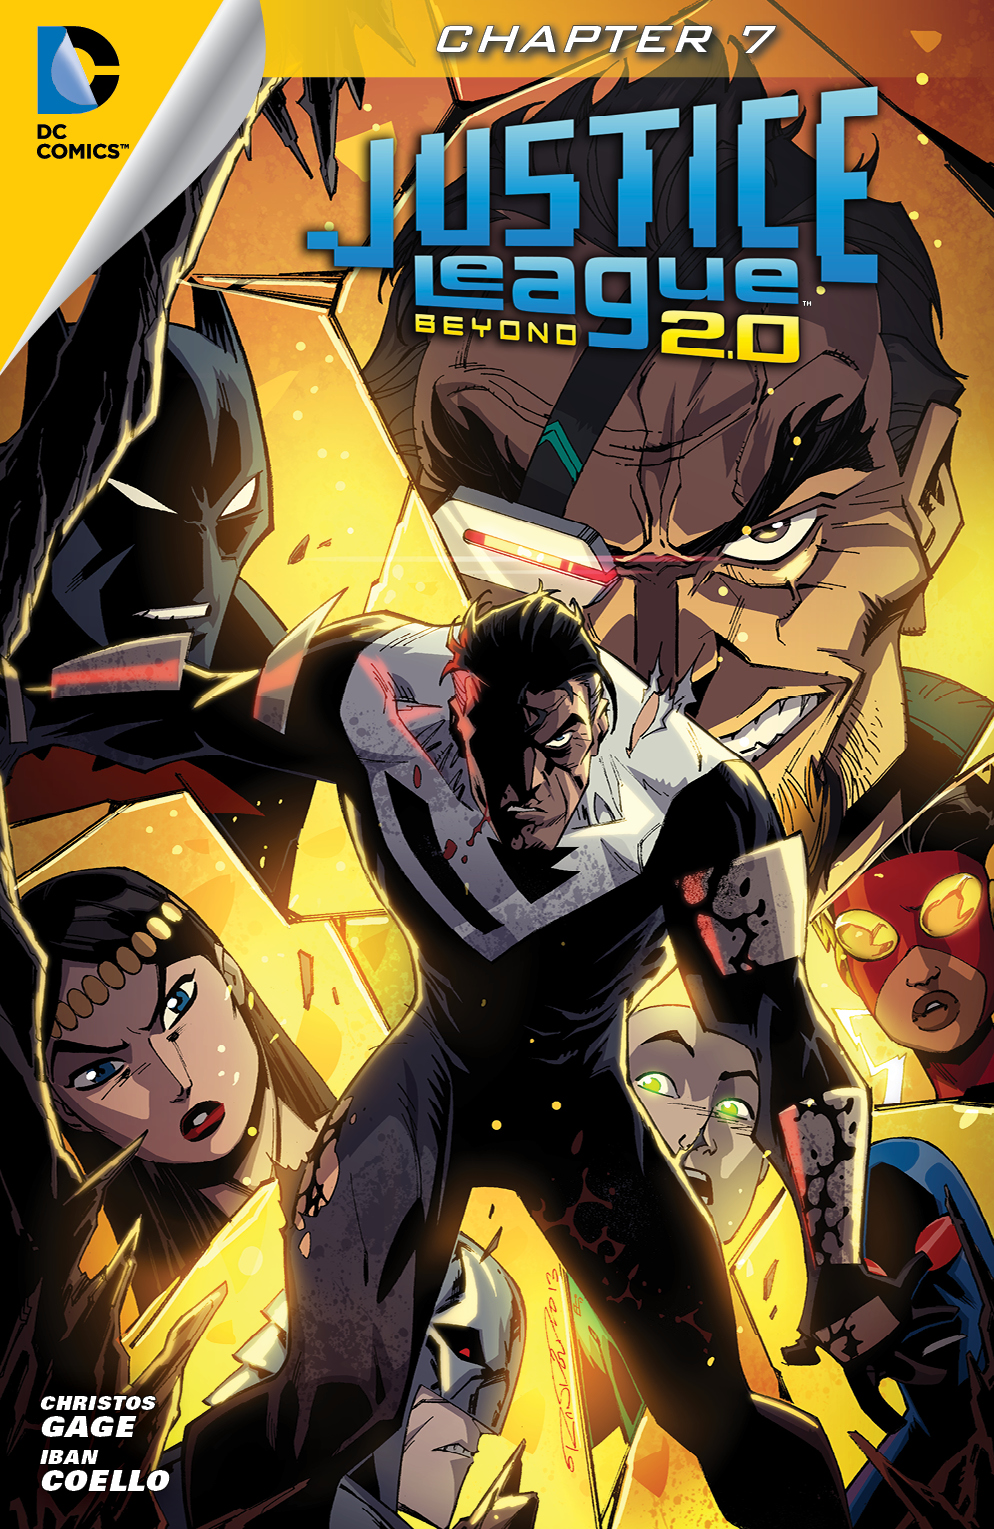 Justice League Beyond 2.0 #7 preview images